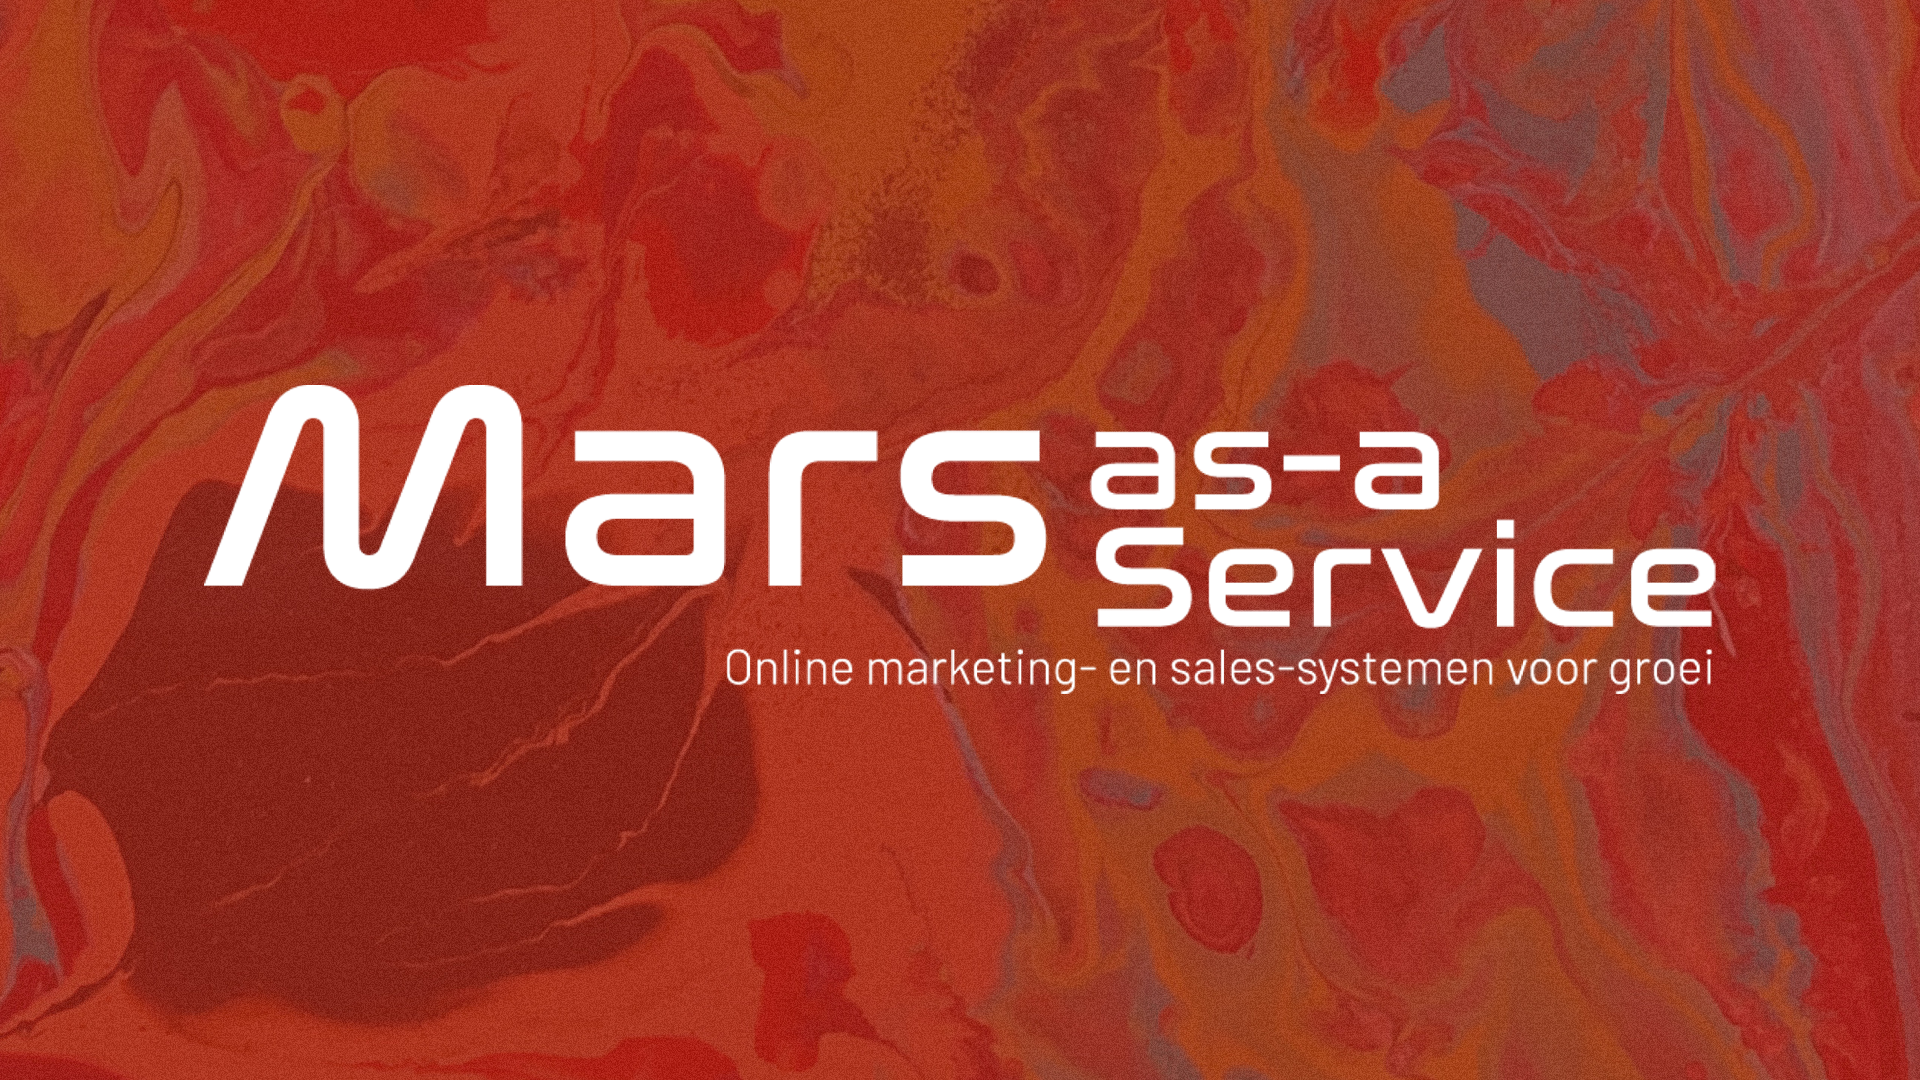 Mars-as-a-Service